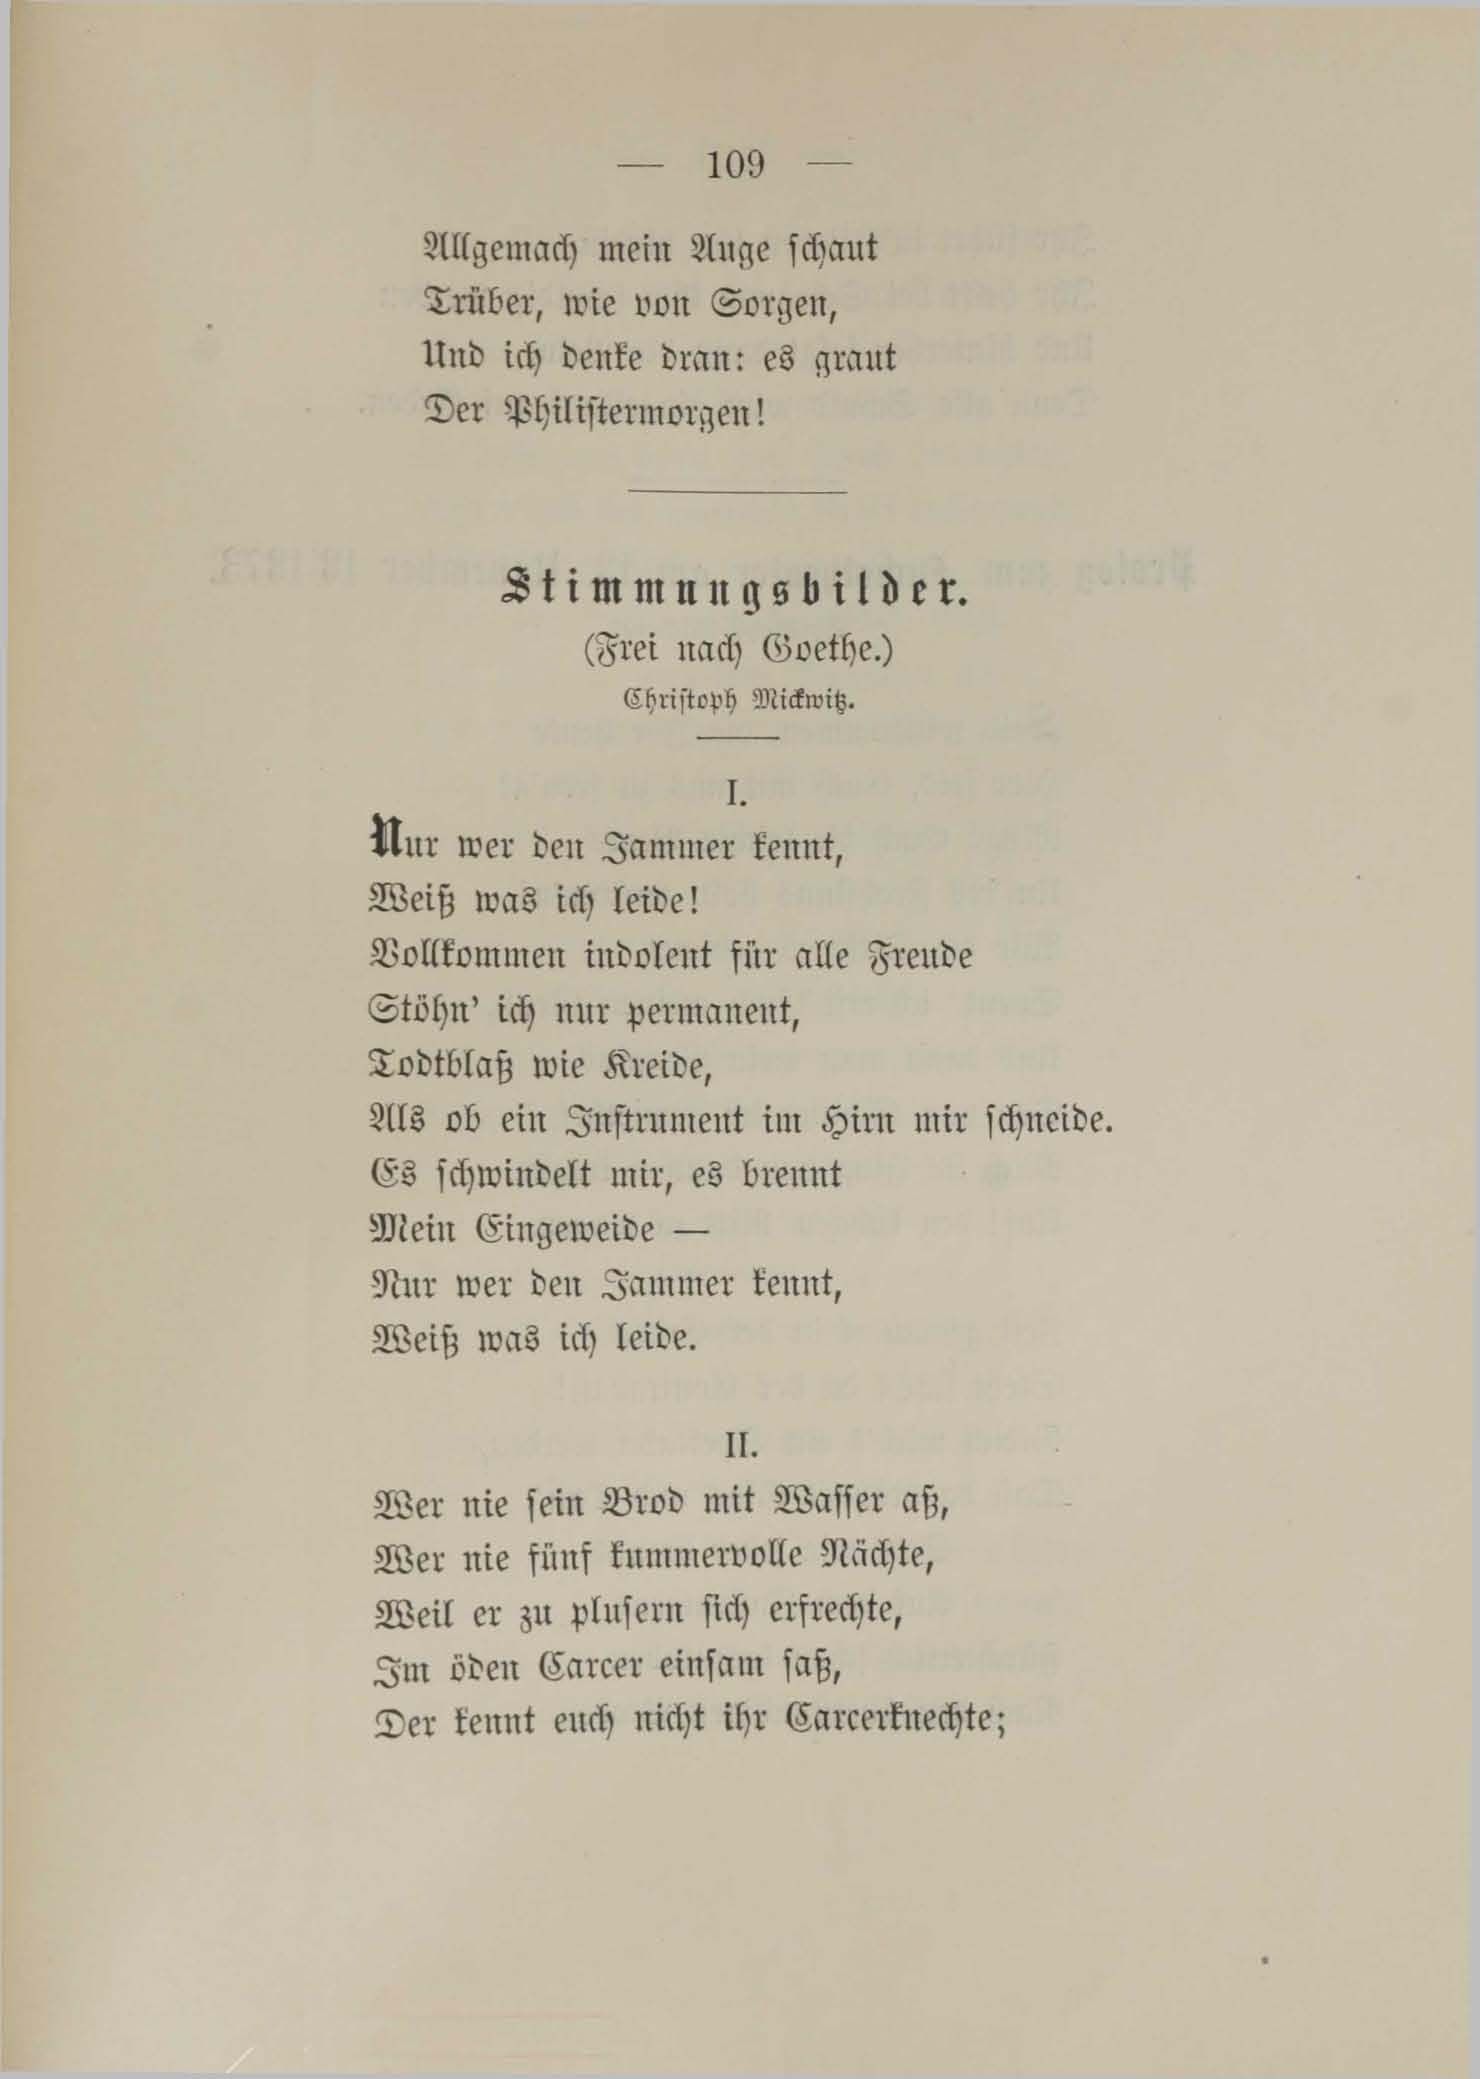 Trinklied (1890) | 2. (109) Main body of text